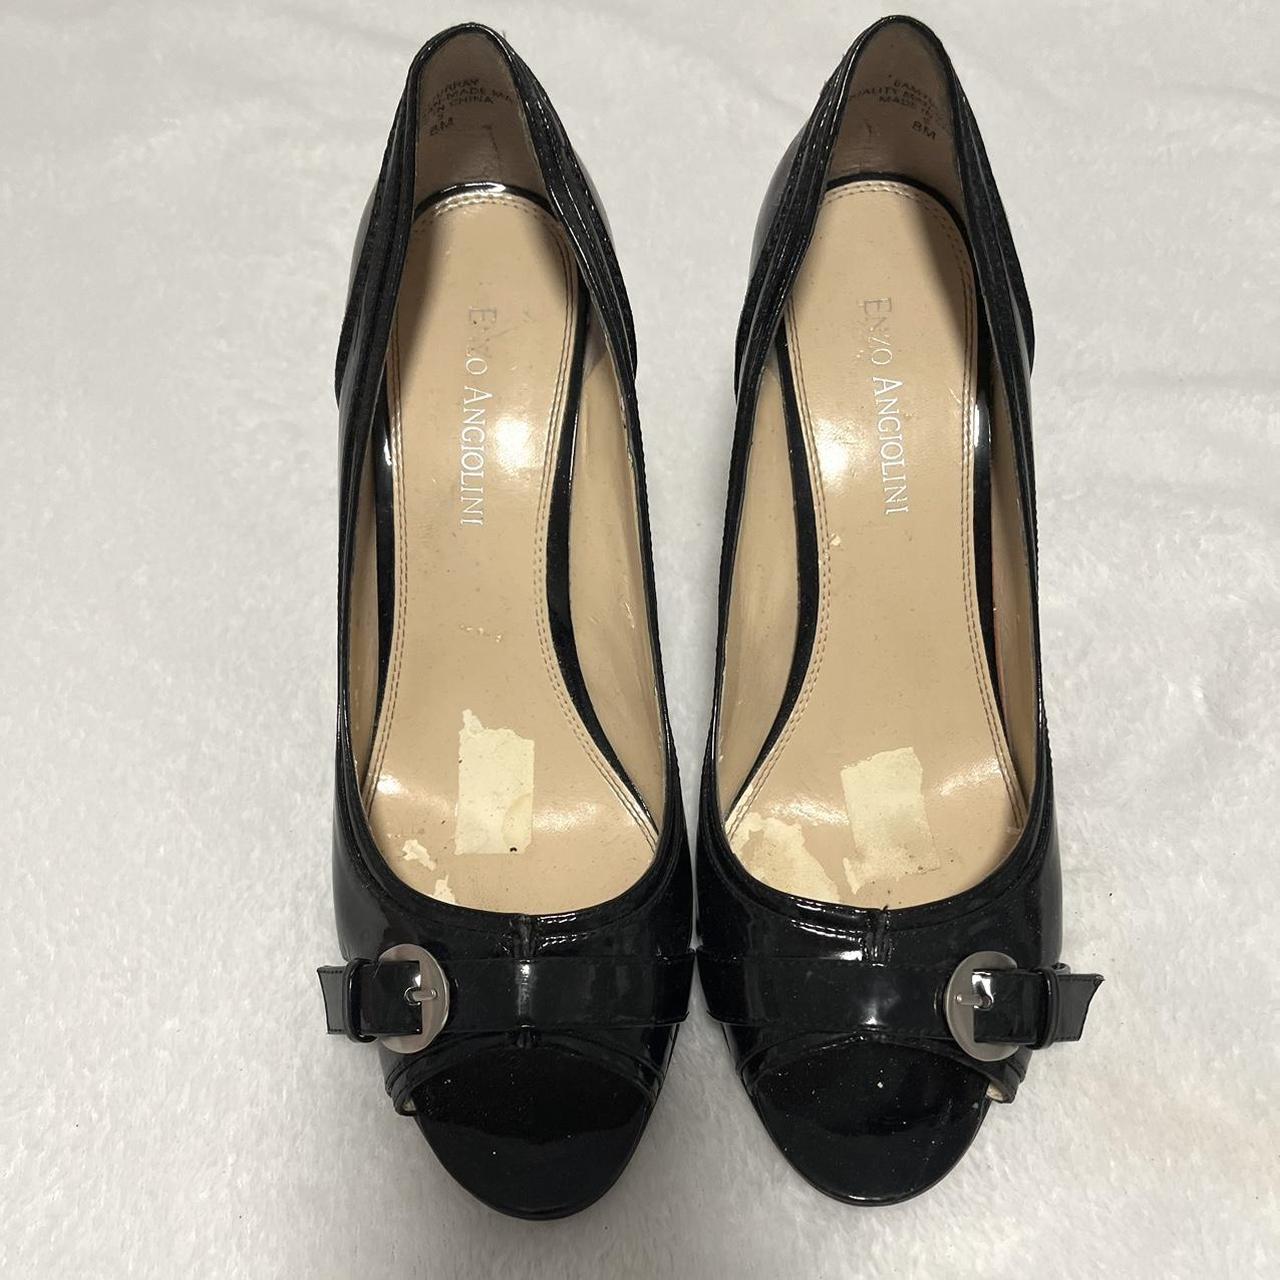 Thrifted black kitten heels. I’ve never worn them... - Depop